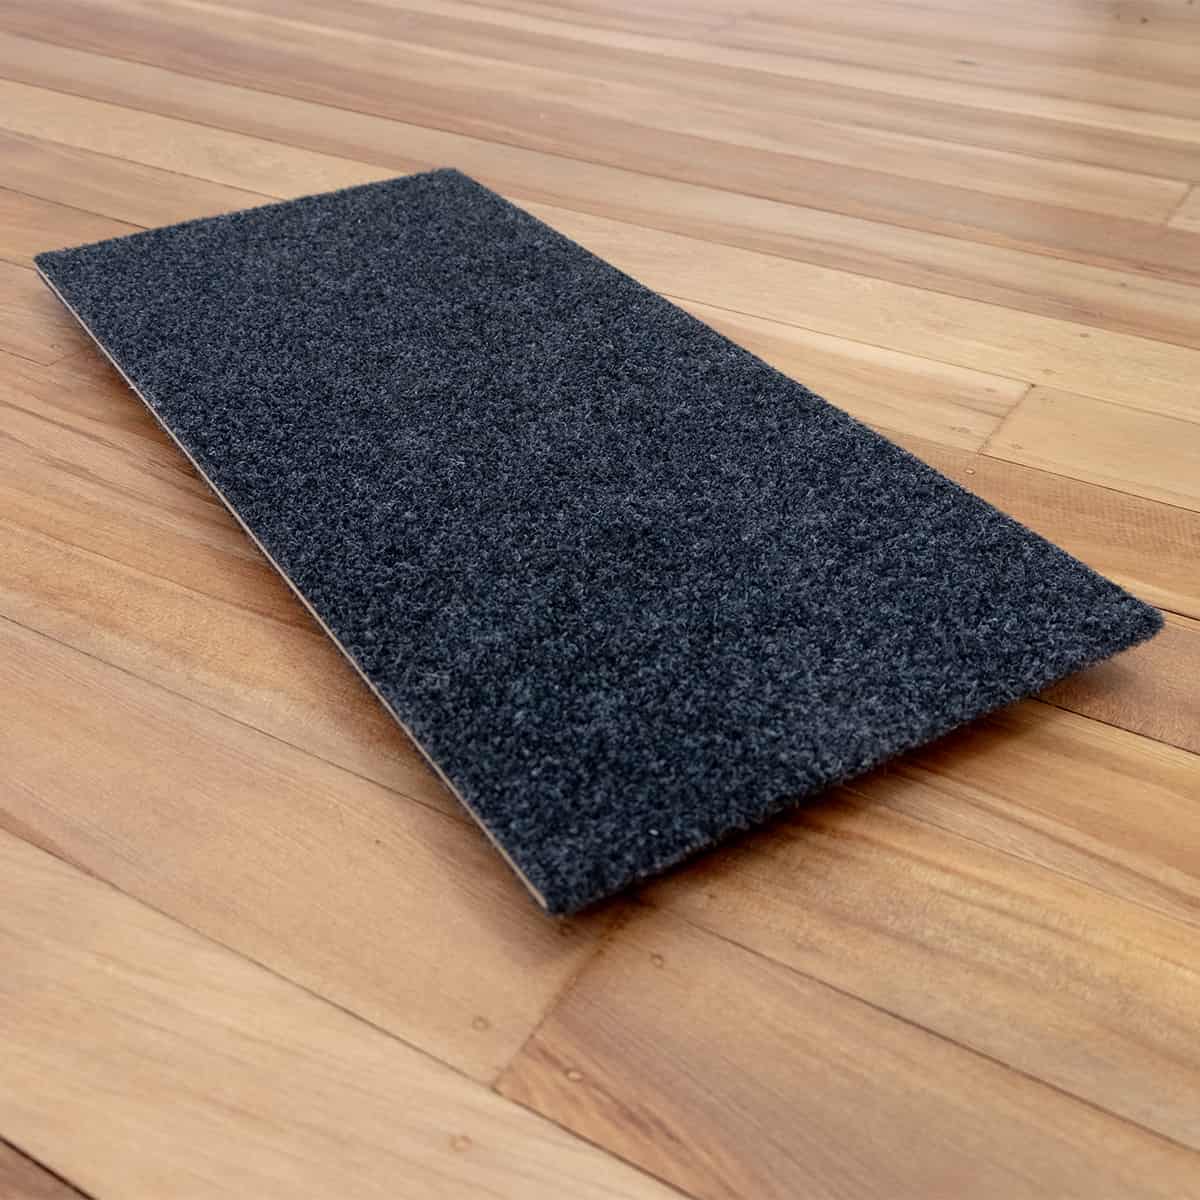 Carpet saver replacement scratching pad